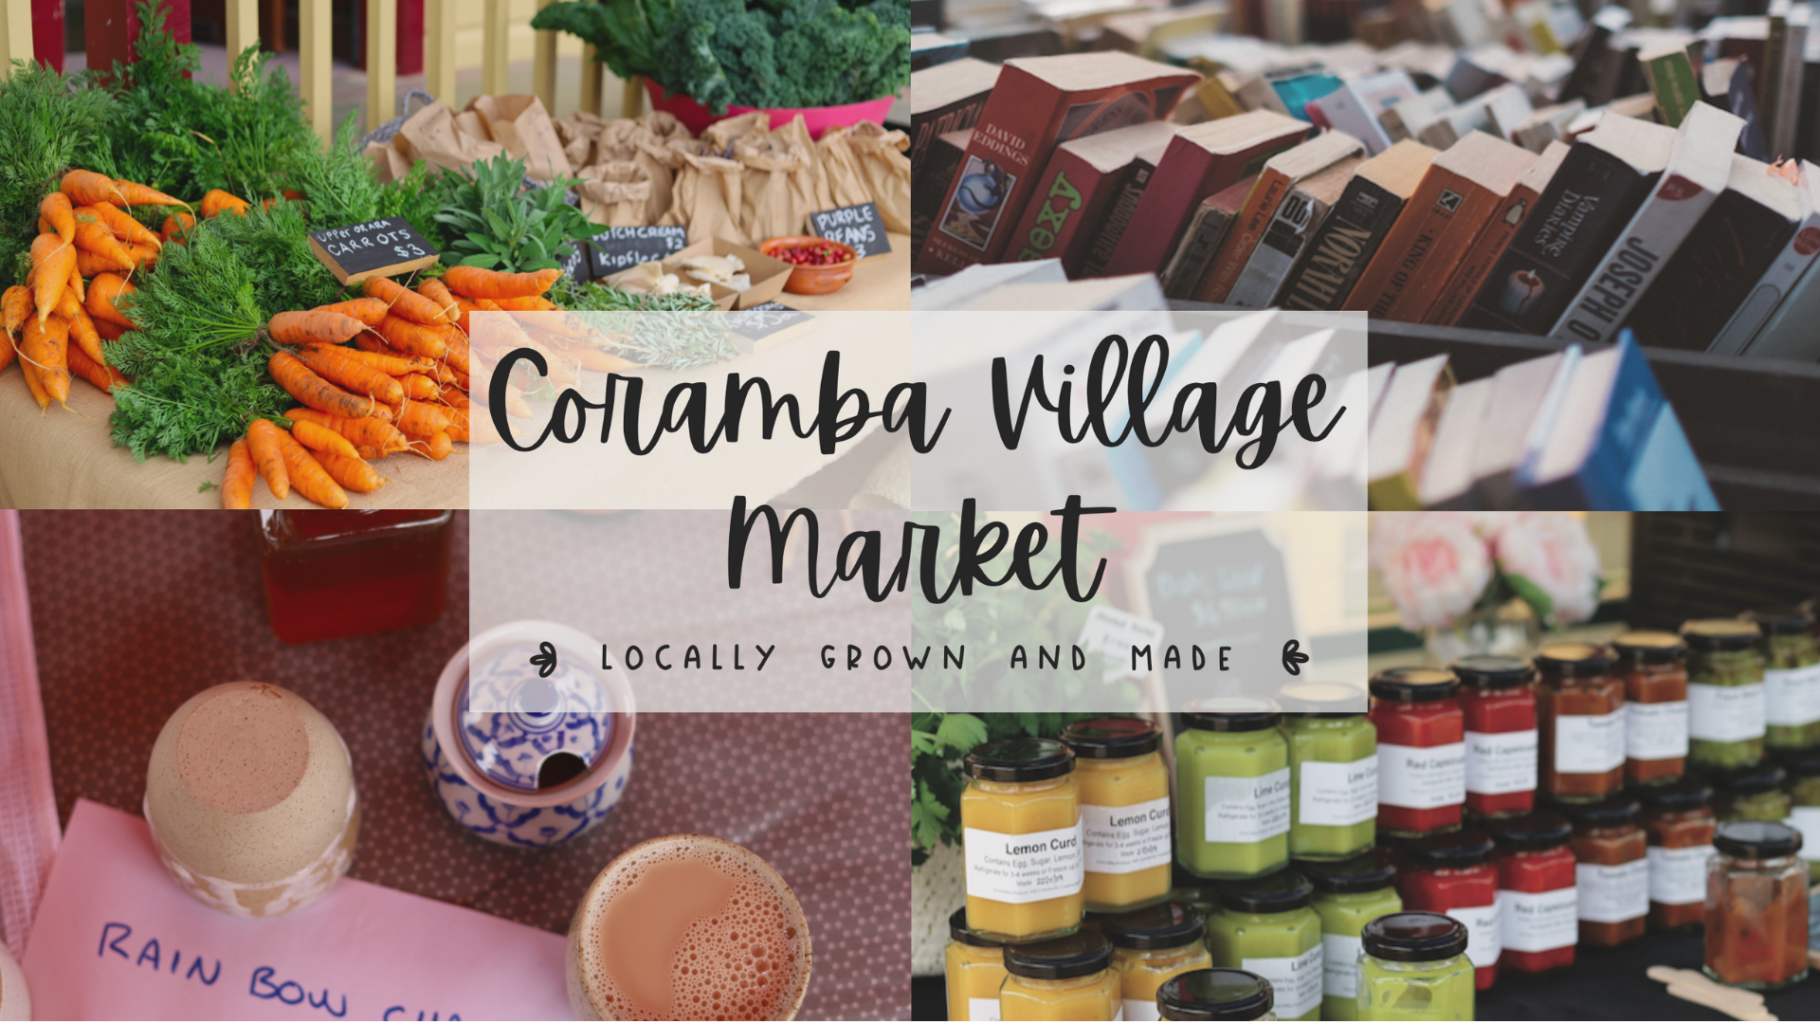 Coramba Village Market - Coffs Coast